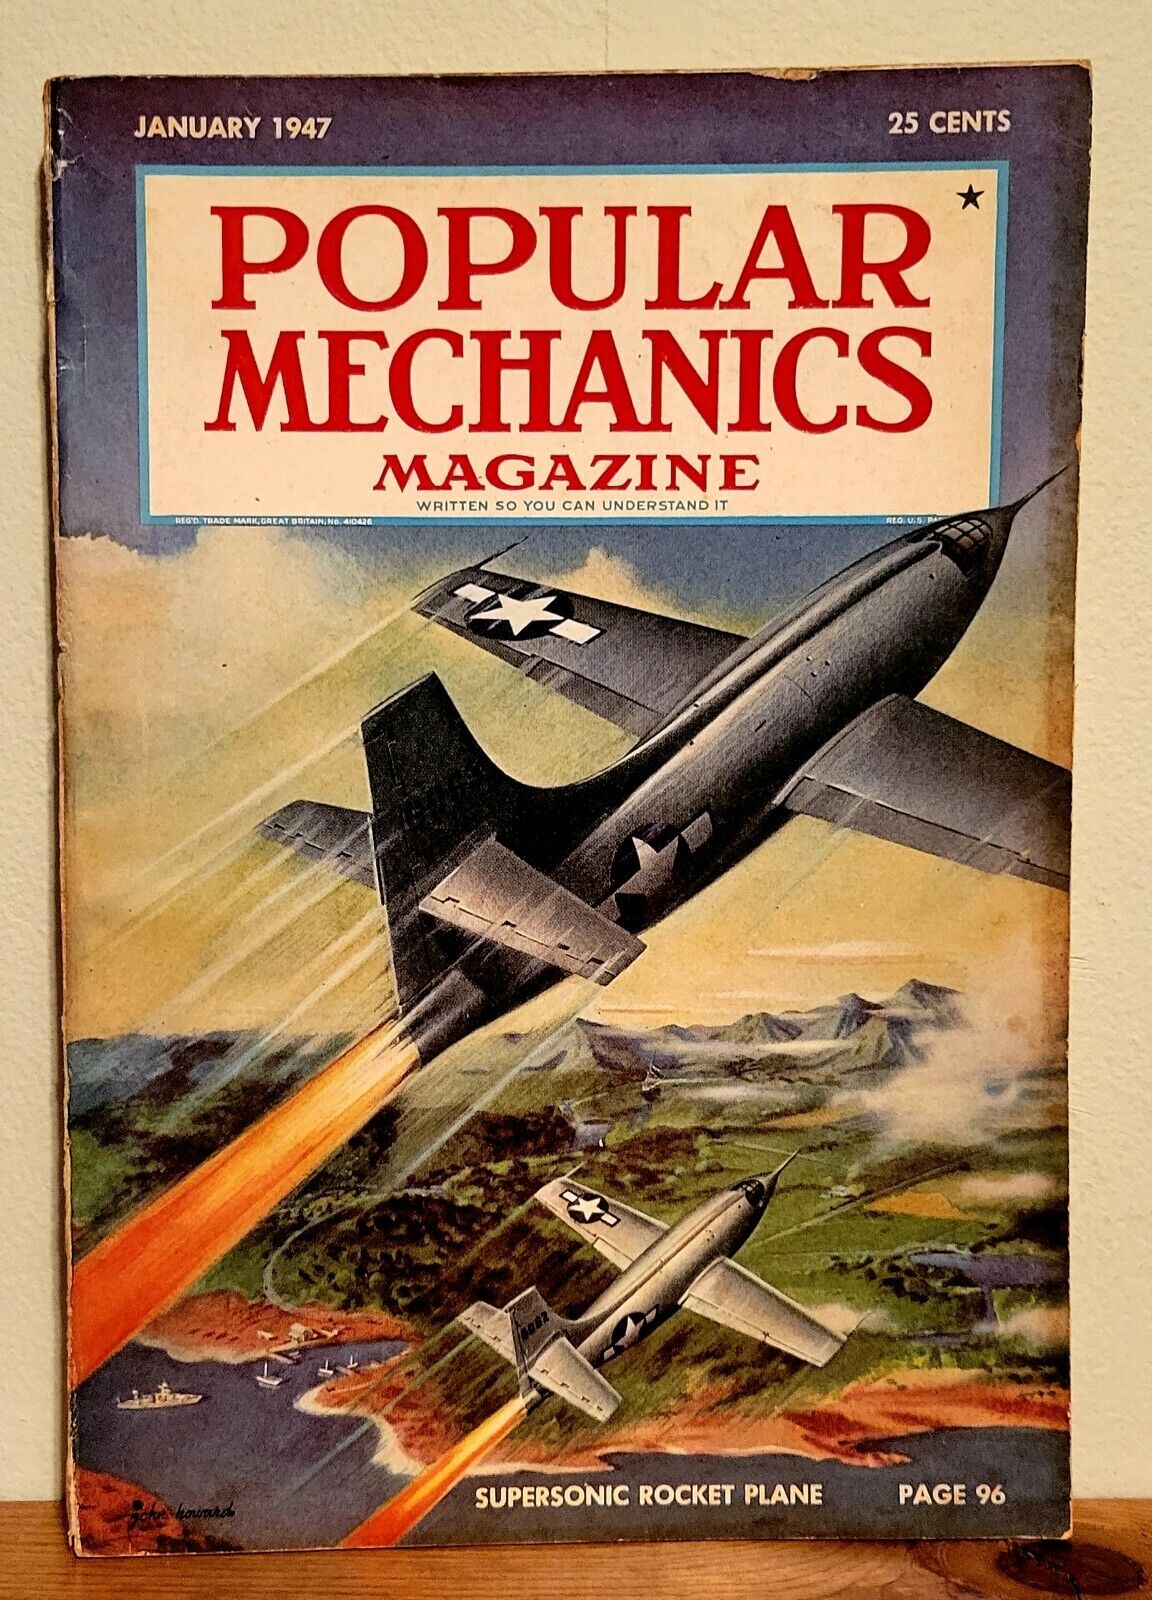 Popular Mechanics Magazine, Jan 1947. Vintage advertising illustrated by John C Howard. Featuring the Supersonic Rocket Plane.